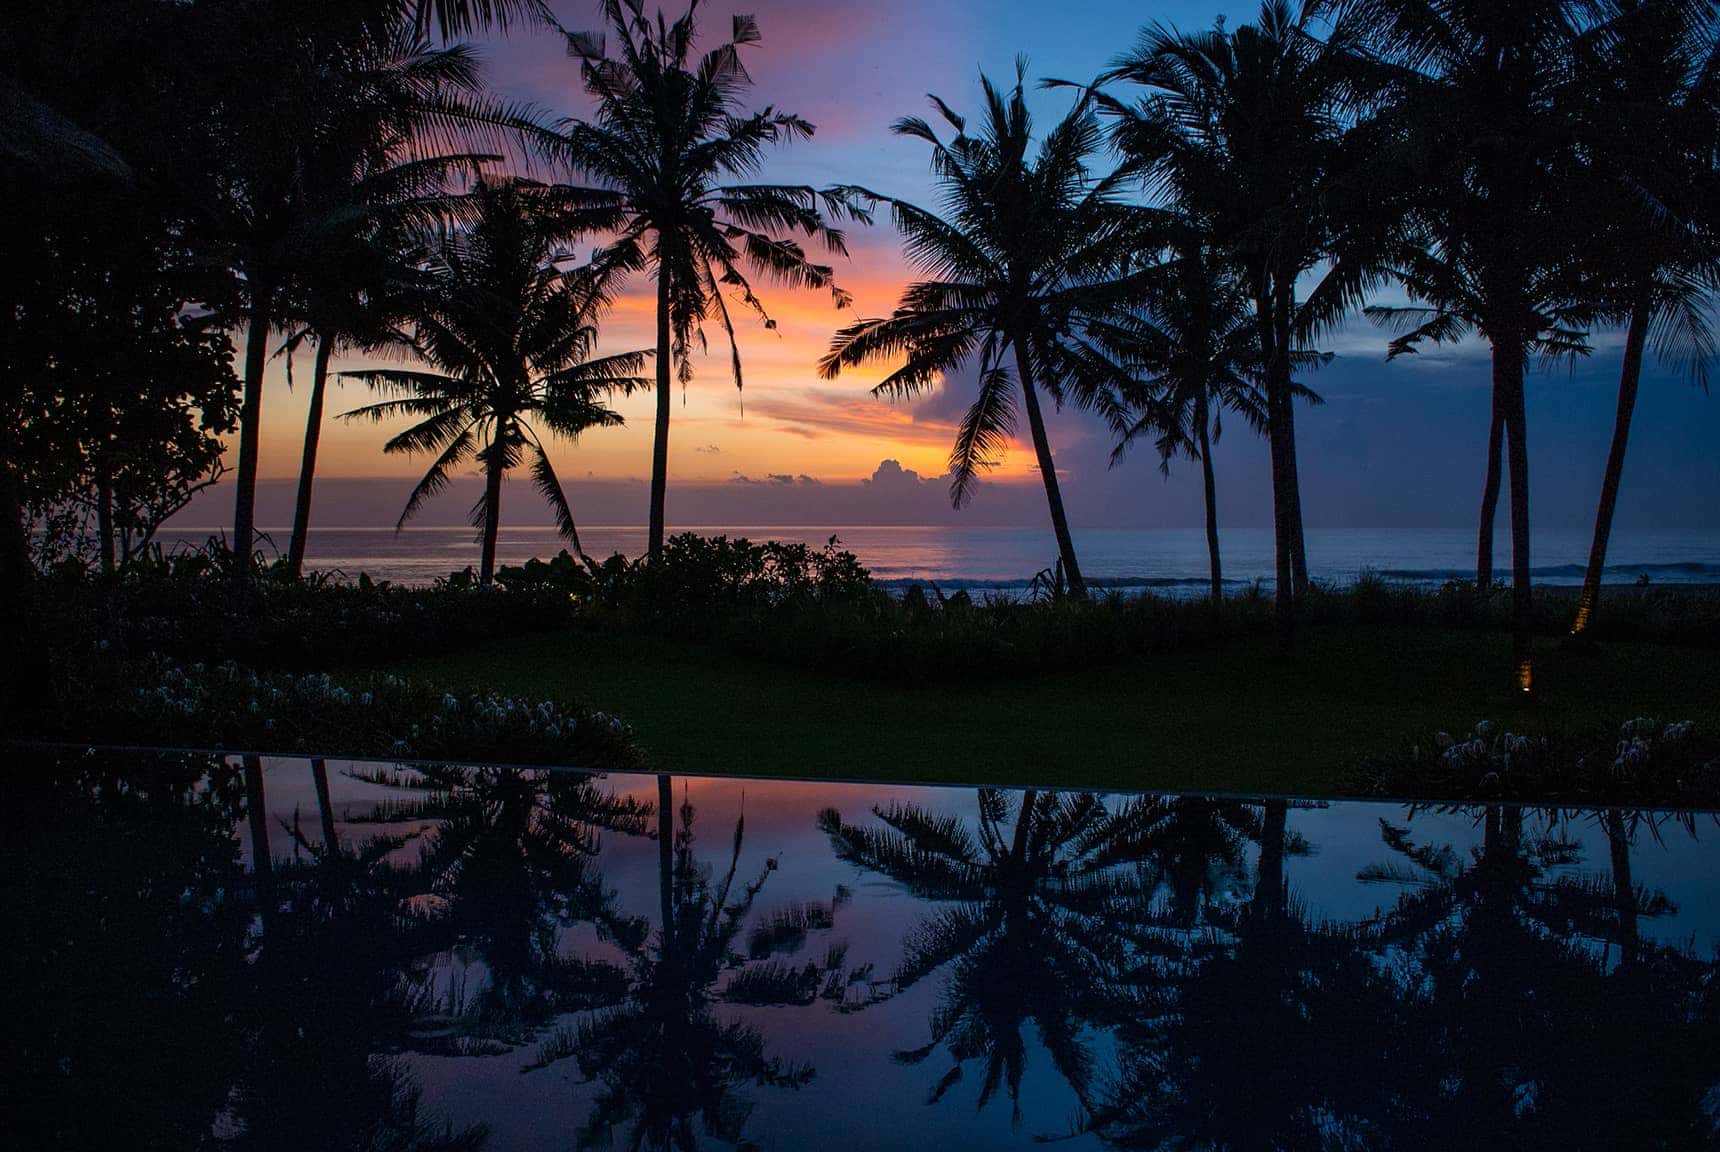 Villa Arika - Echo Beach, Bali Indonesia (Bali villa photography by master photographer Rick Carmichael of LuxViz)